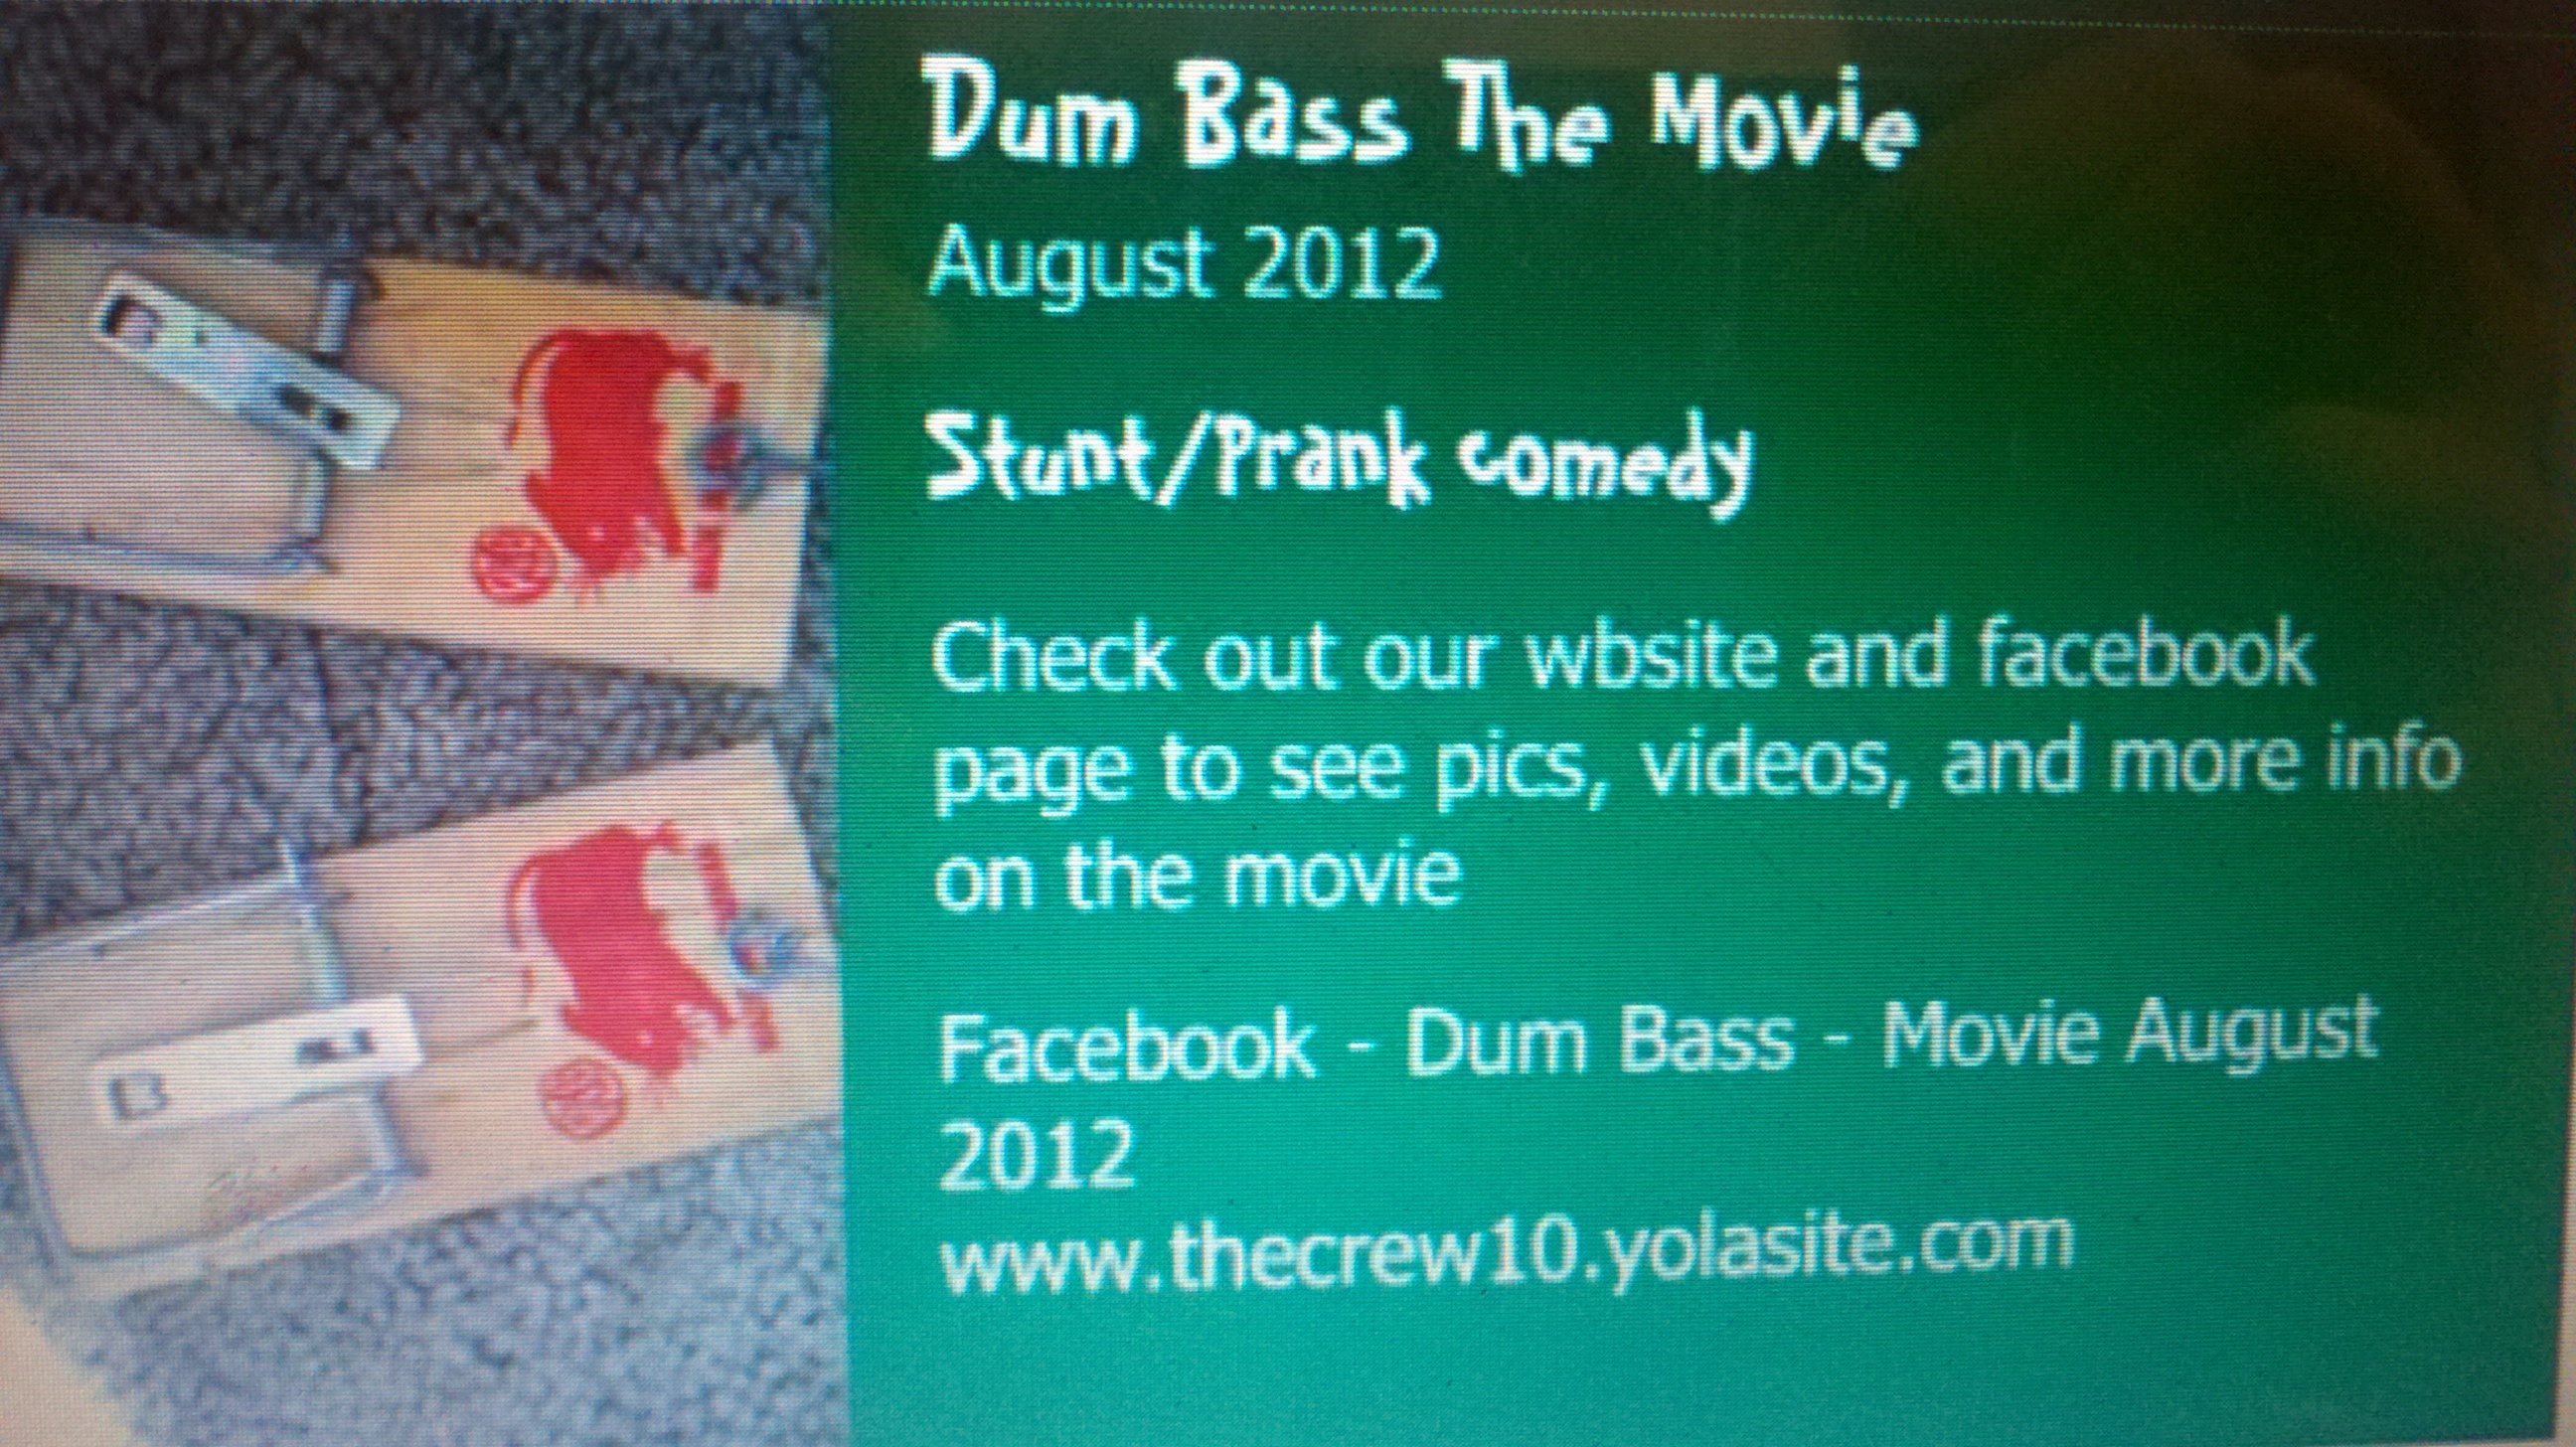 Dum Bass The Movie Ad